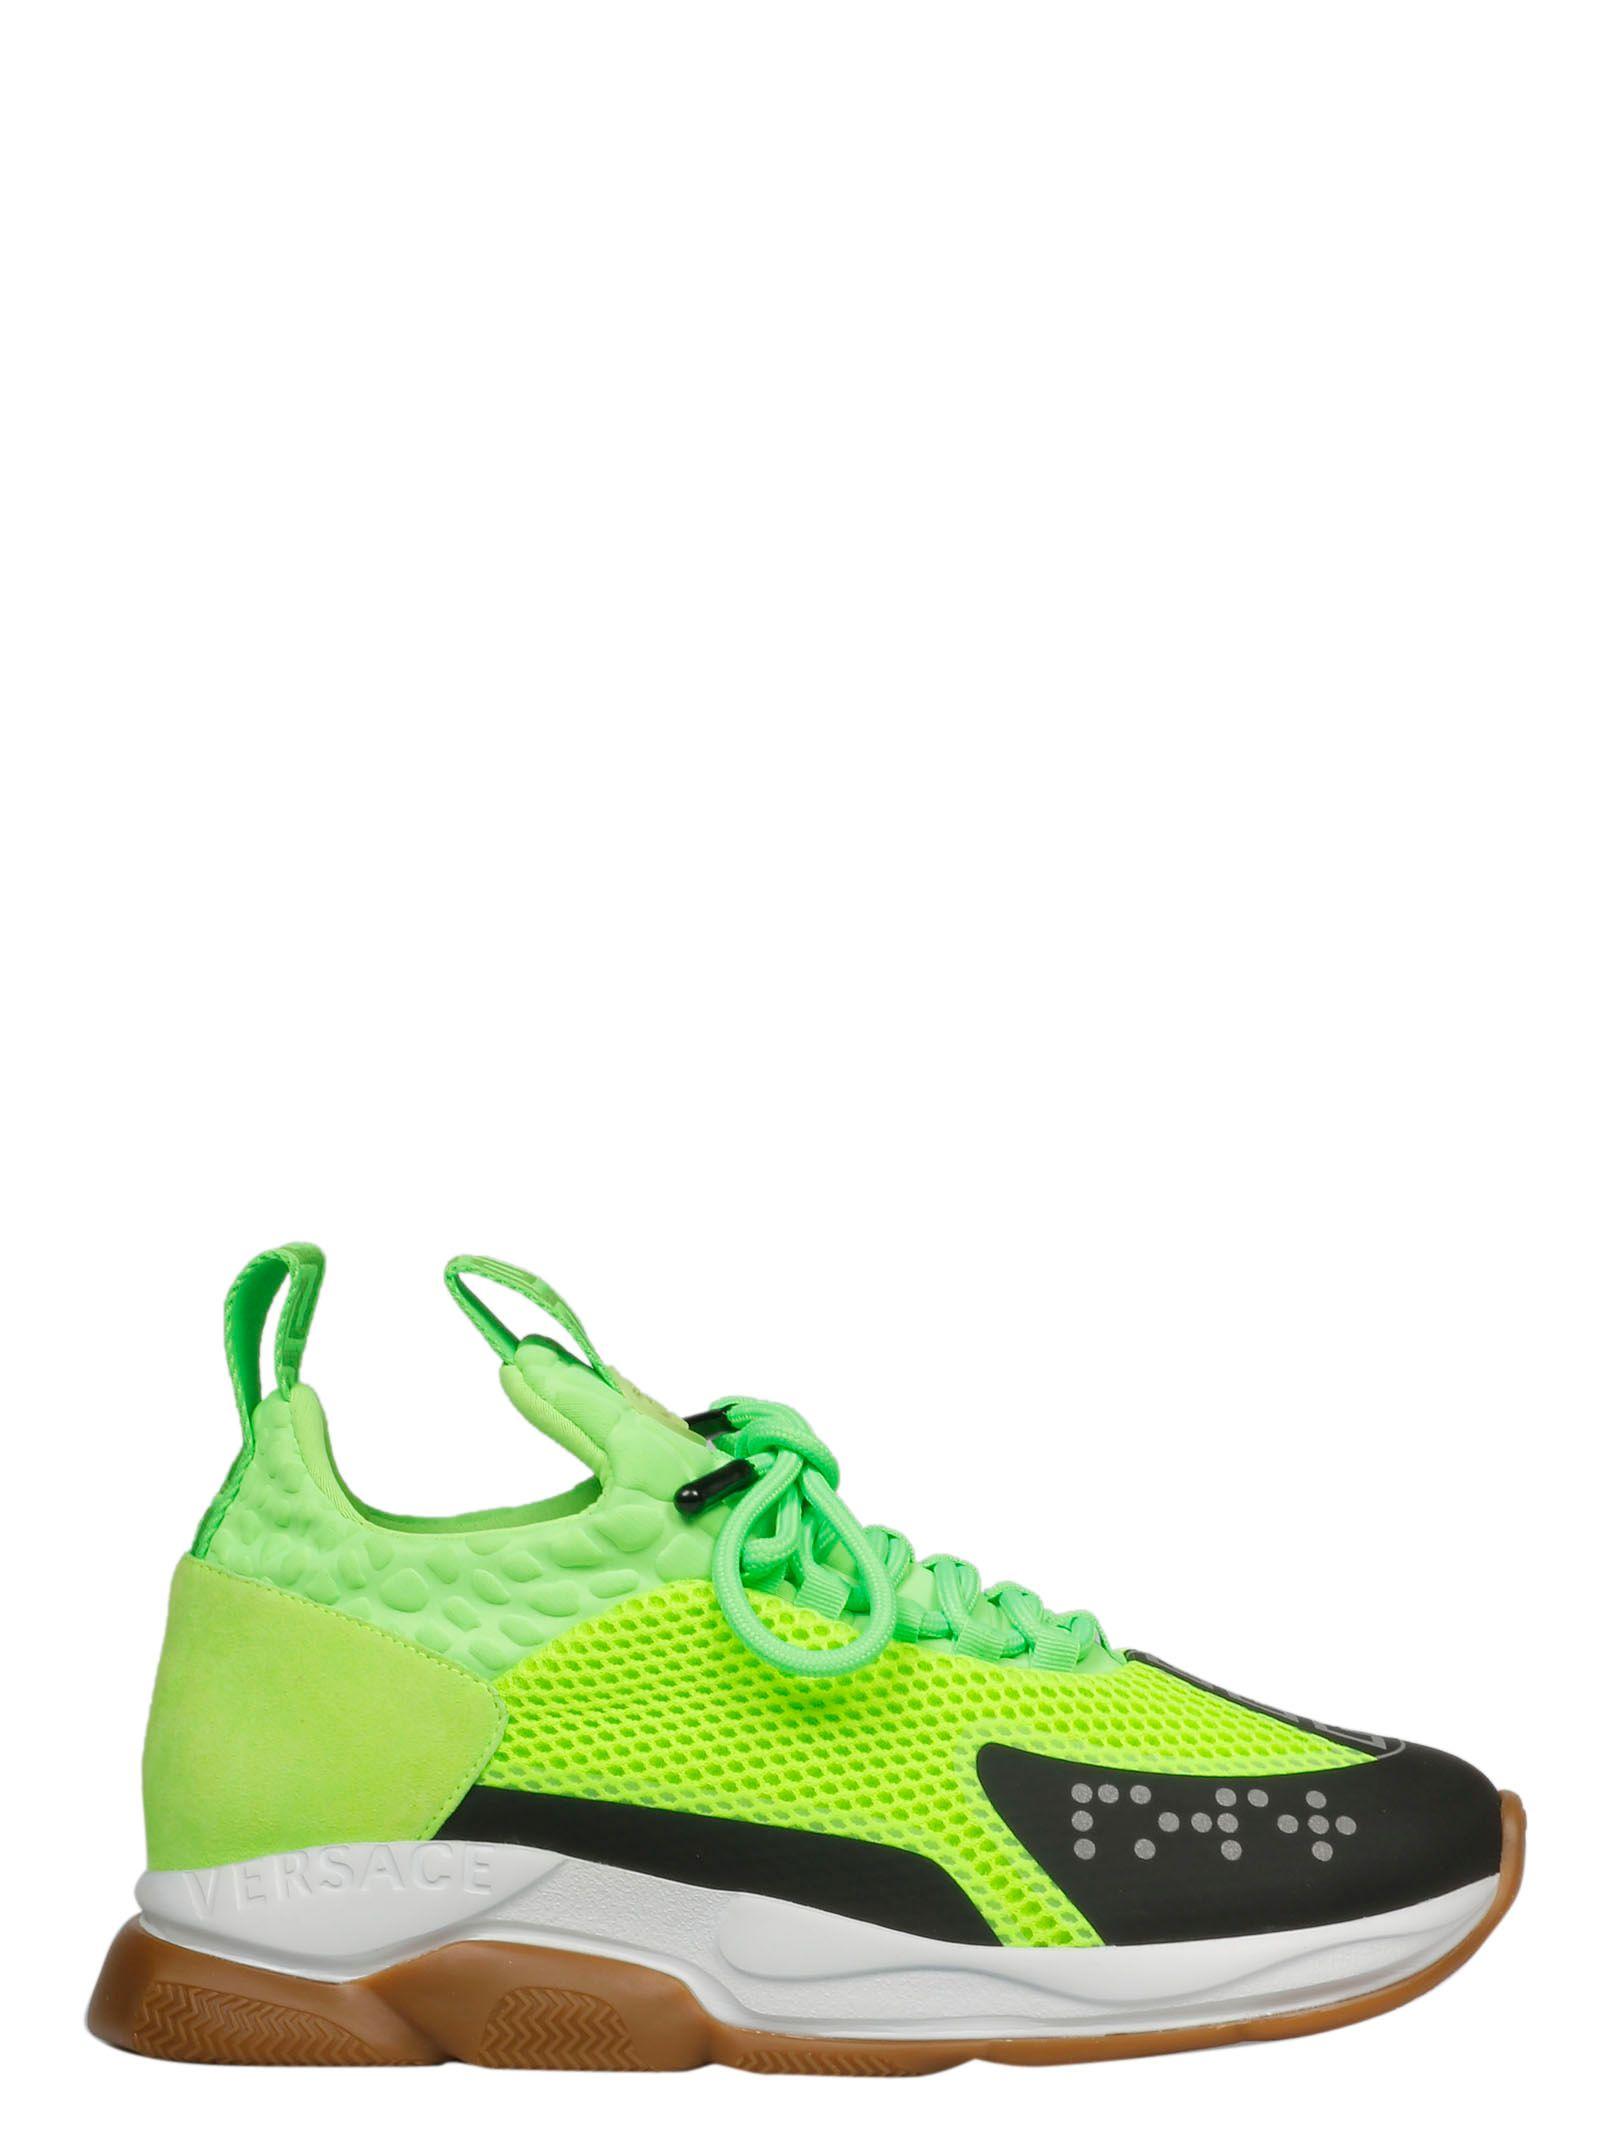 Versace Green Nylon Sneakers in Green for Men - Lyst